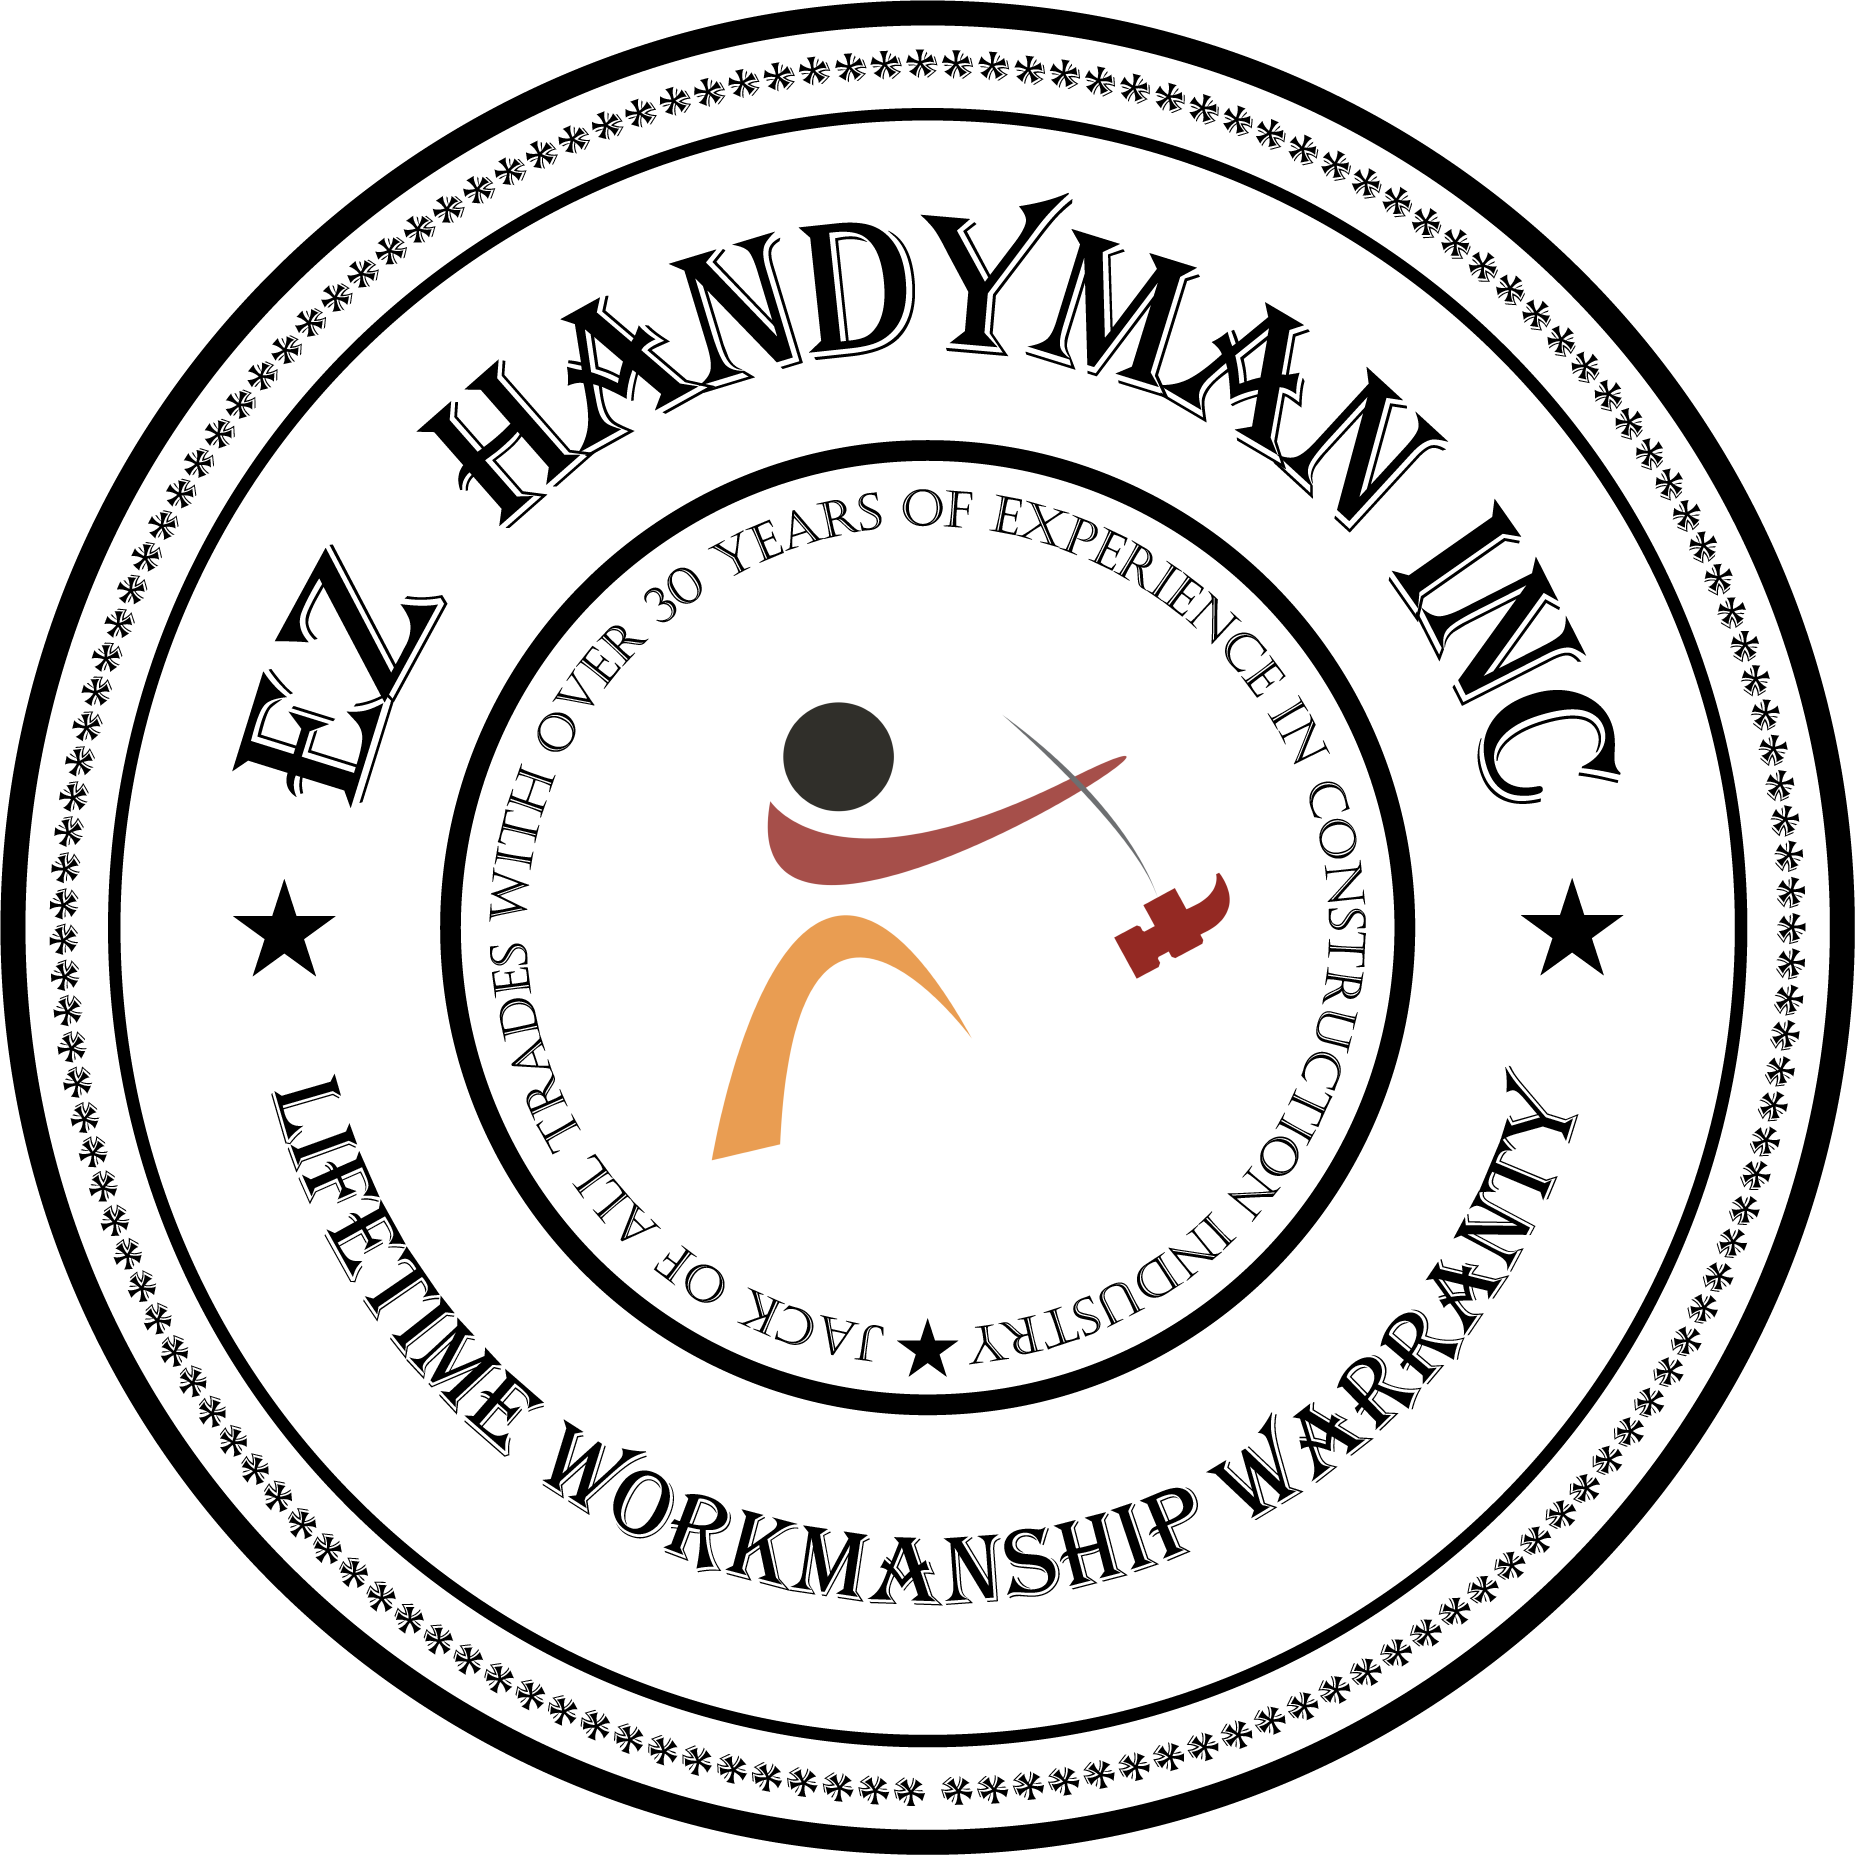 EZ Handyman Logo